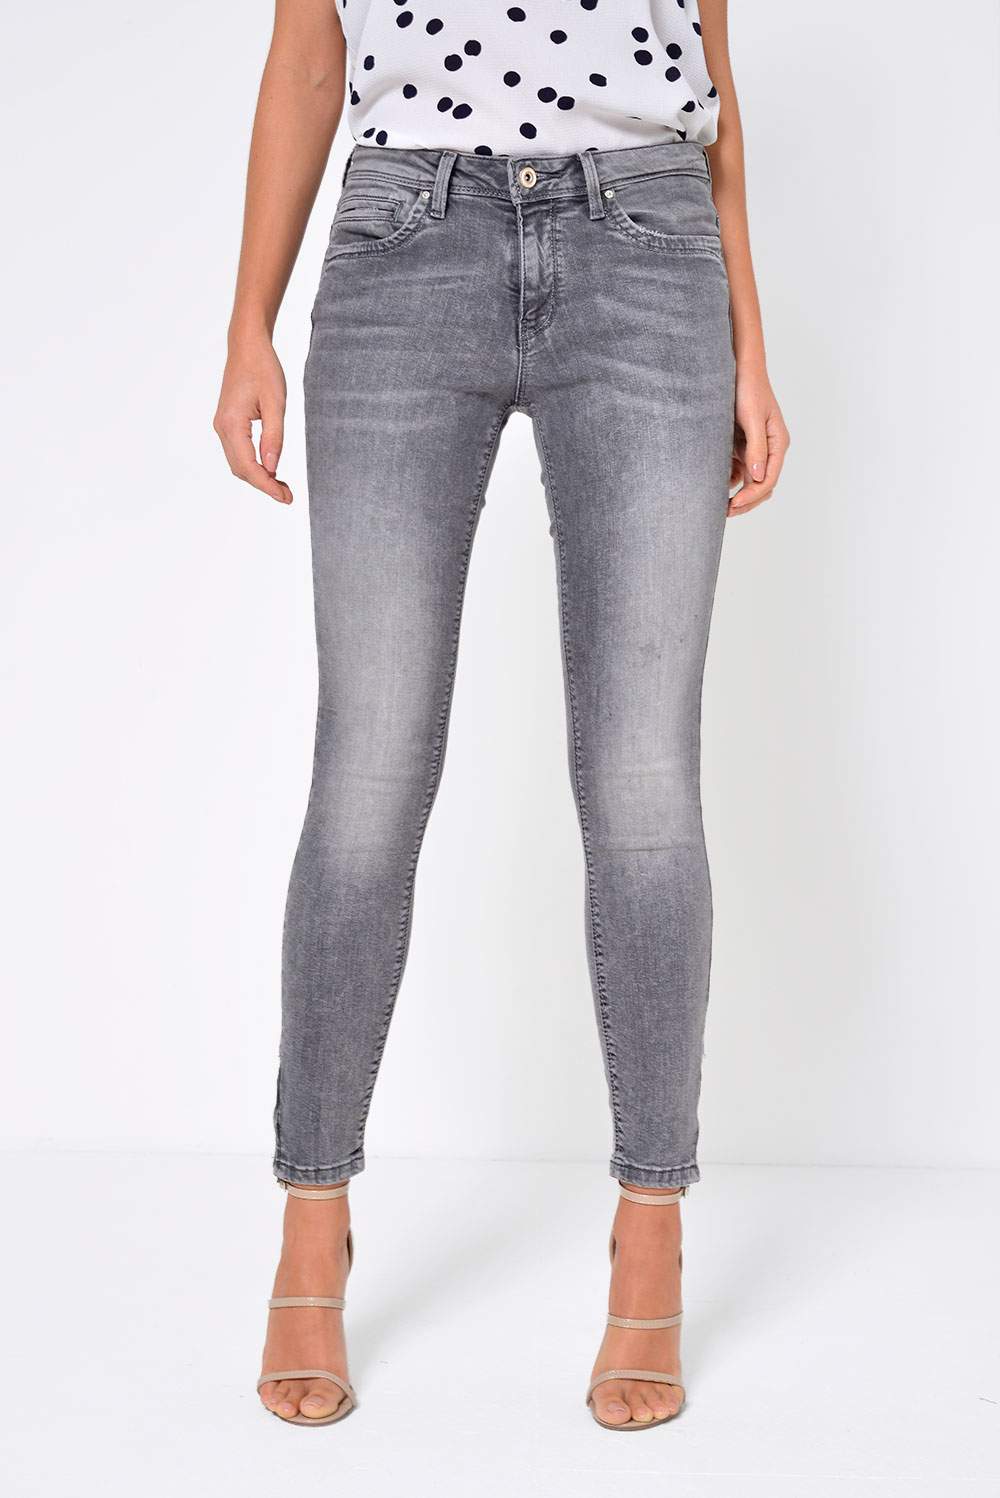 Only Kendell Regular Ankle Zip Jeans in Medium Grey | iCLOTHING - iCLOTHING